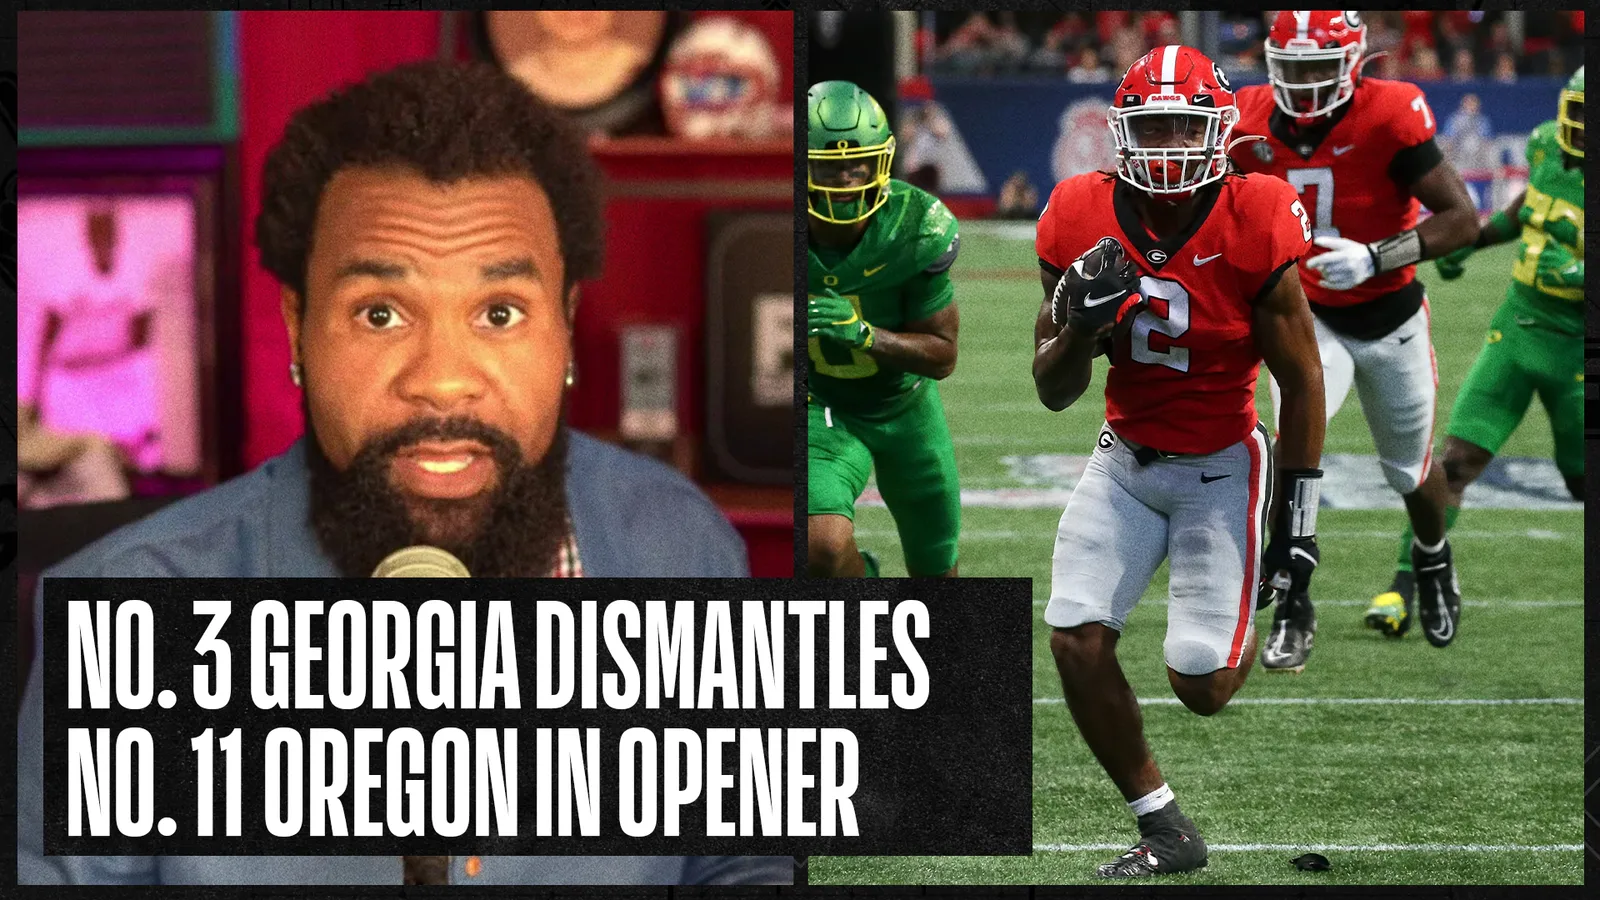 Analysis: Georgia dismantles Oregon in opener